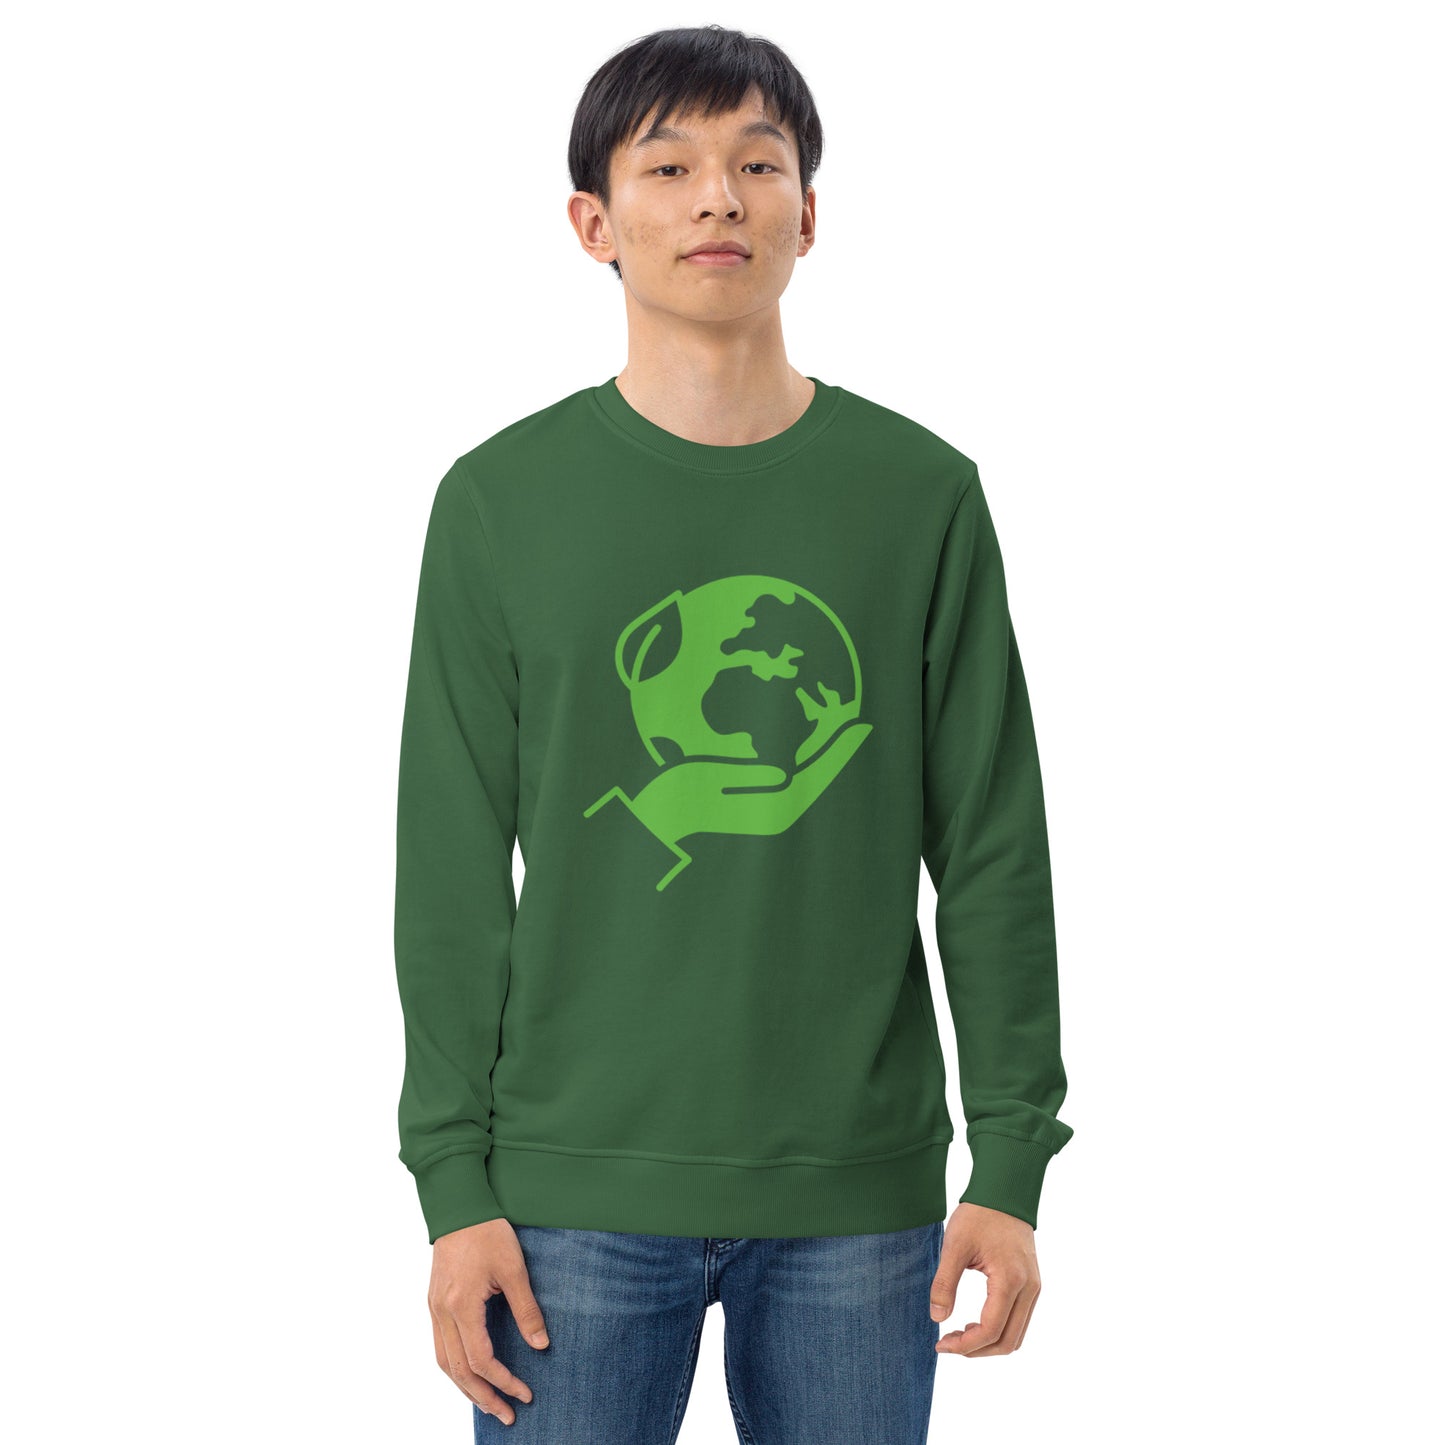 Unisex Organic Cotton sweatshirt